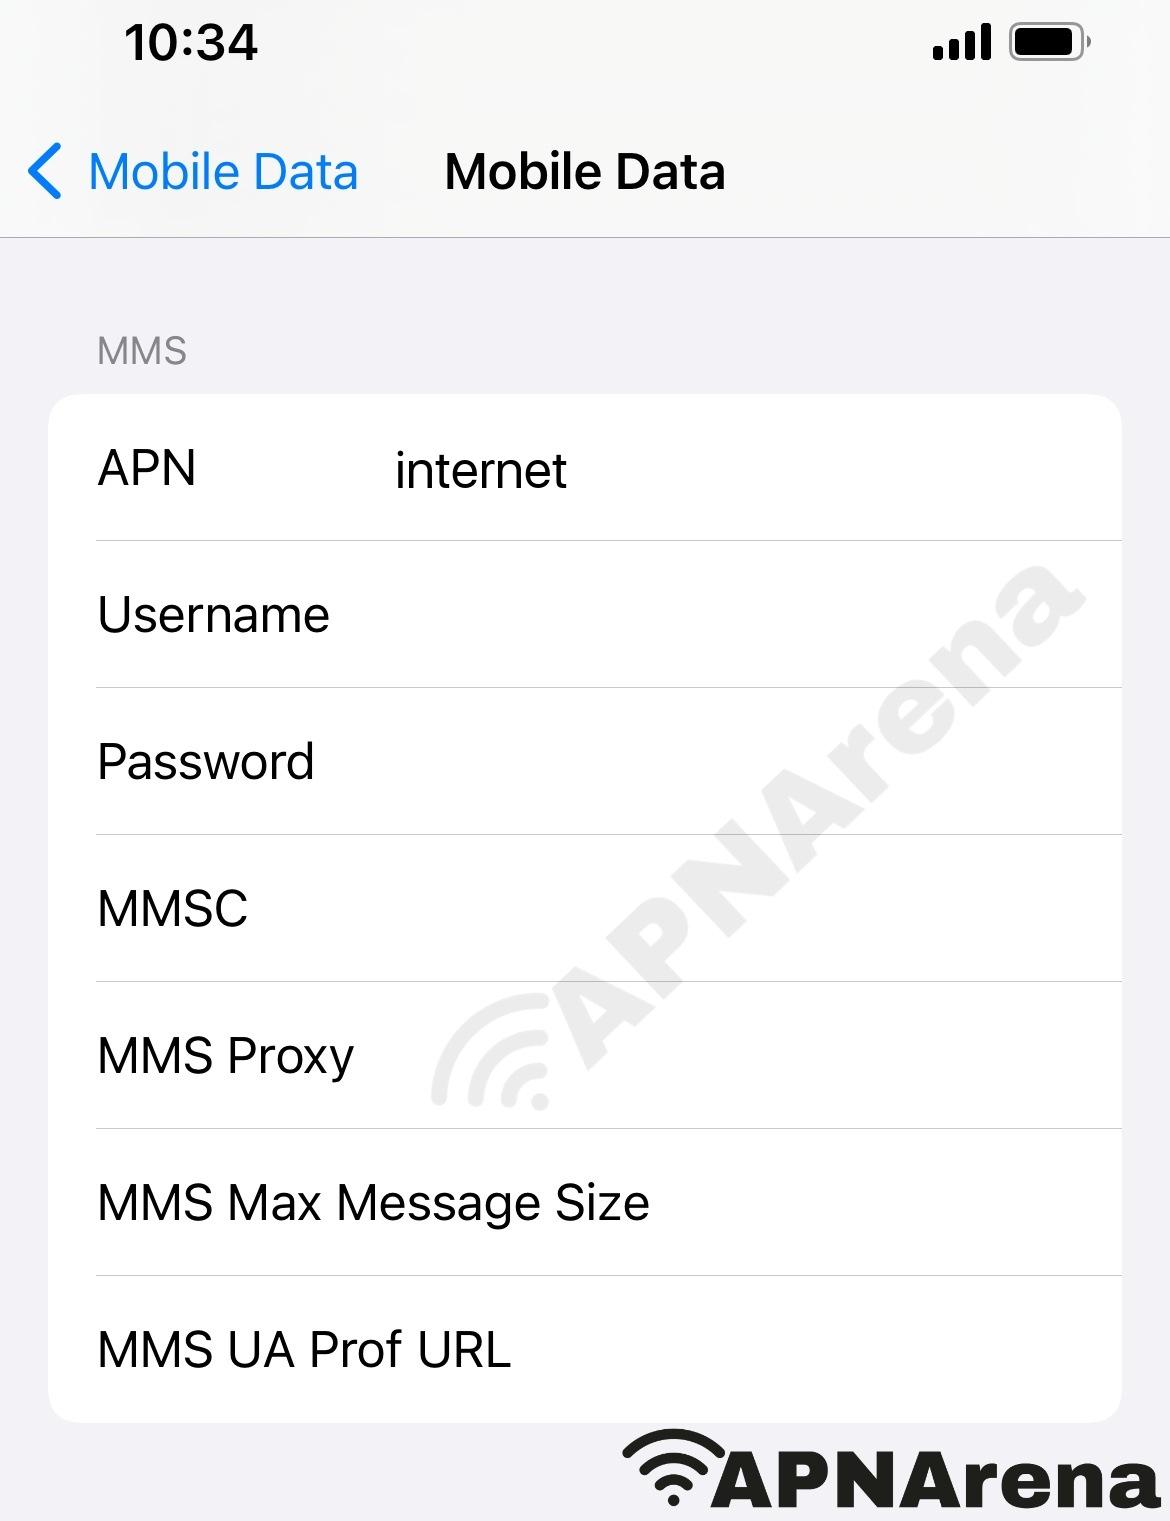 ASDA Mobile MMS Settings for iPhone